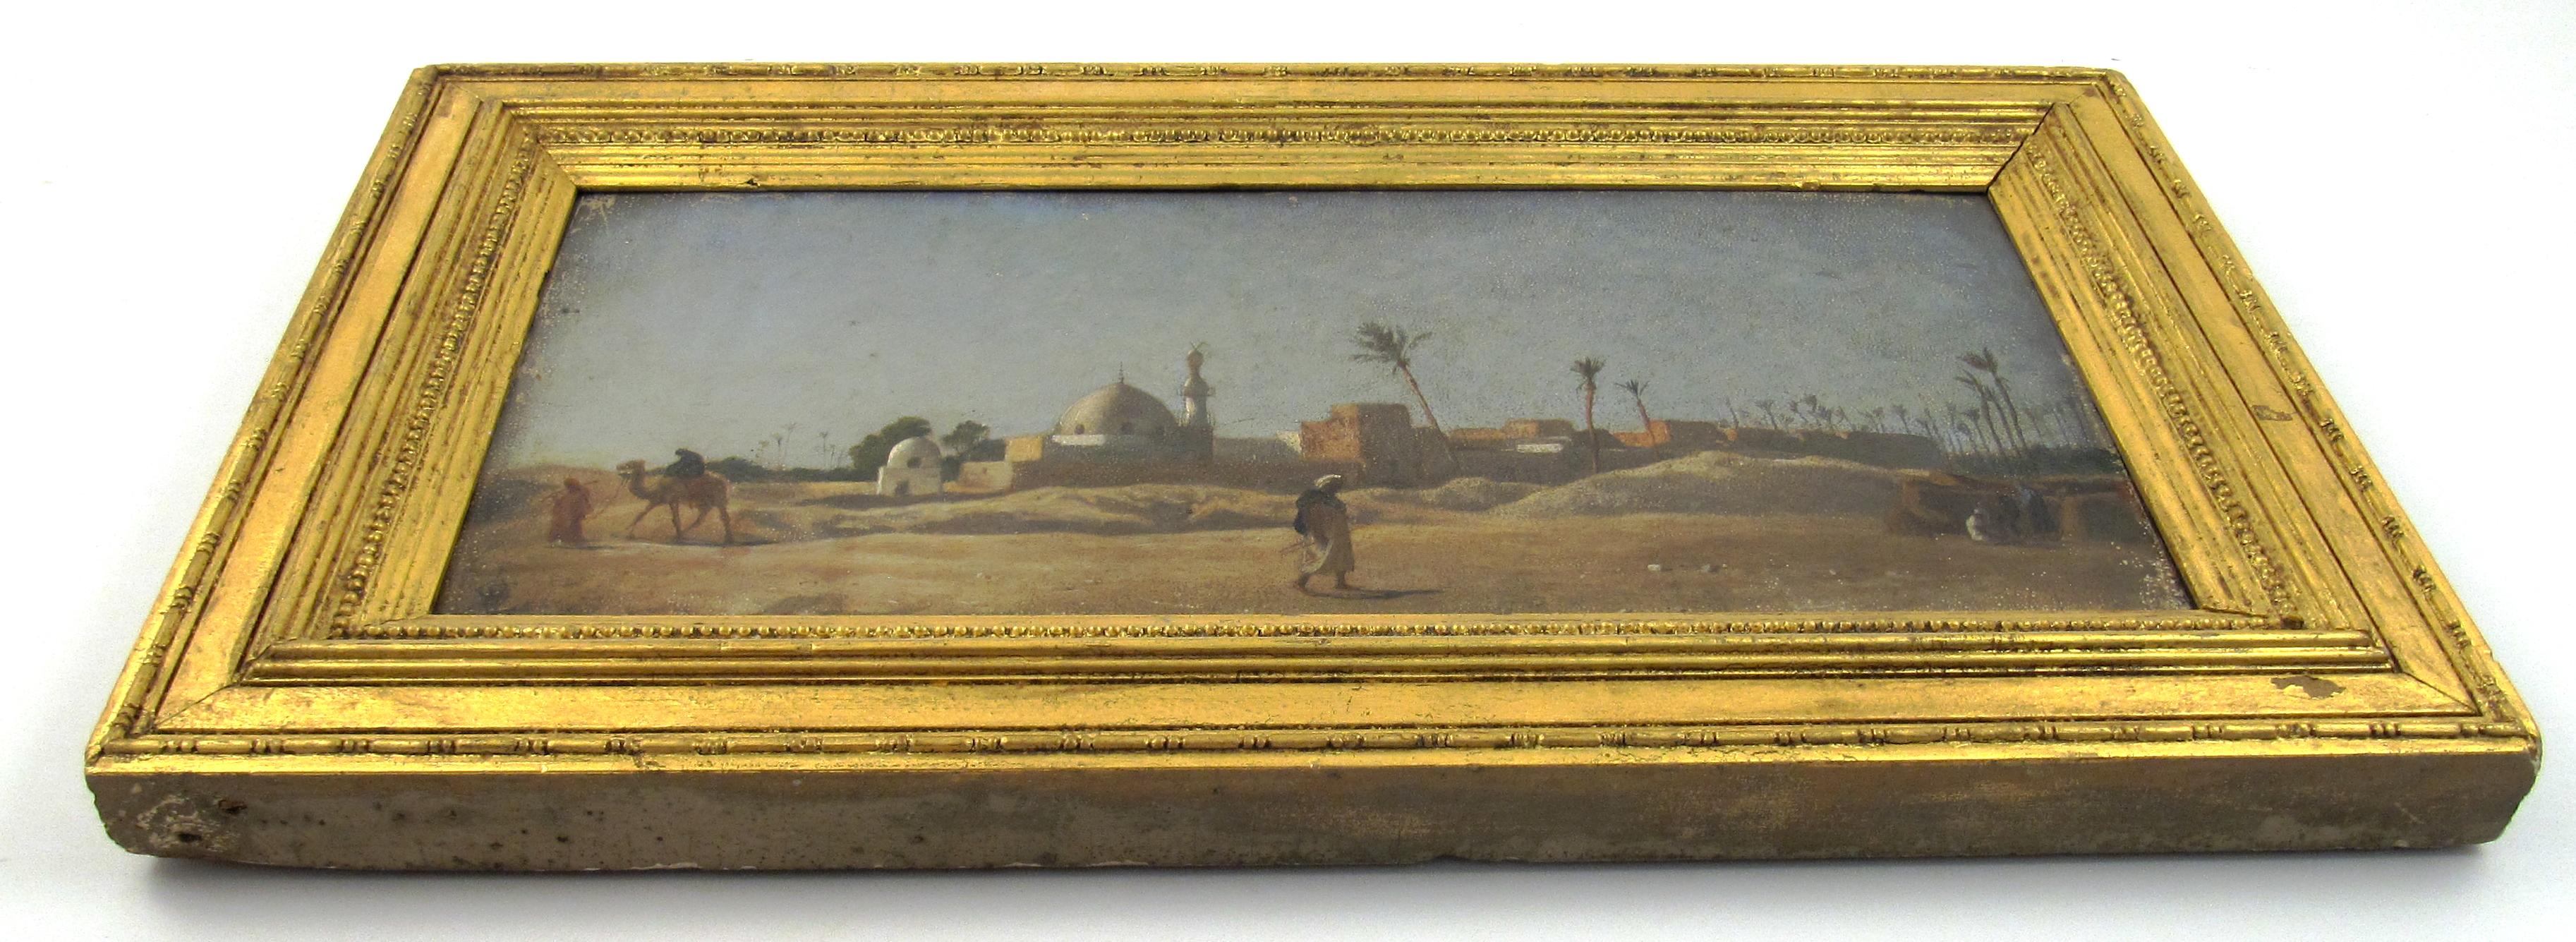 Frederick Goodall Dessert Village Egypt Plein Air Orientalist Oil Painting 1859 4